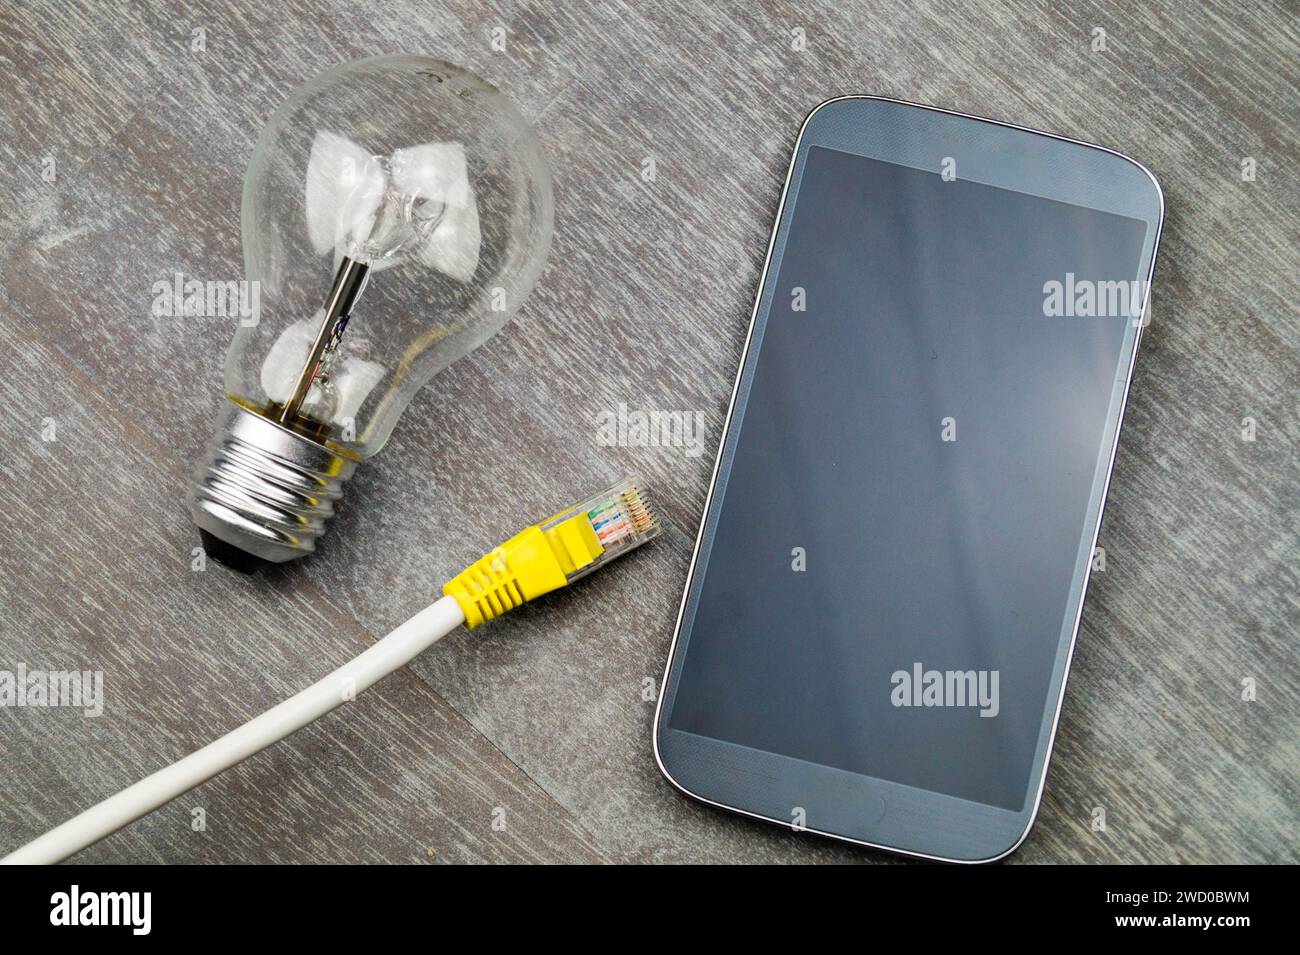 light bulb, network plug and smartphone, symbolic image for smart home Stock Photo